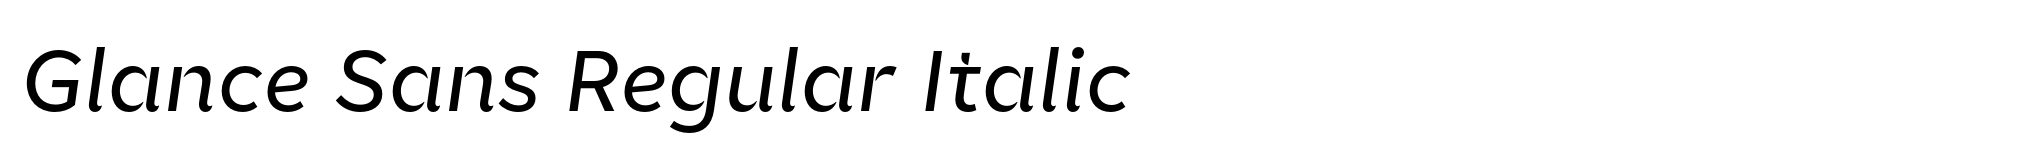 Glance Sans Regular Italic image